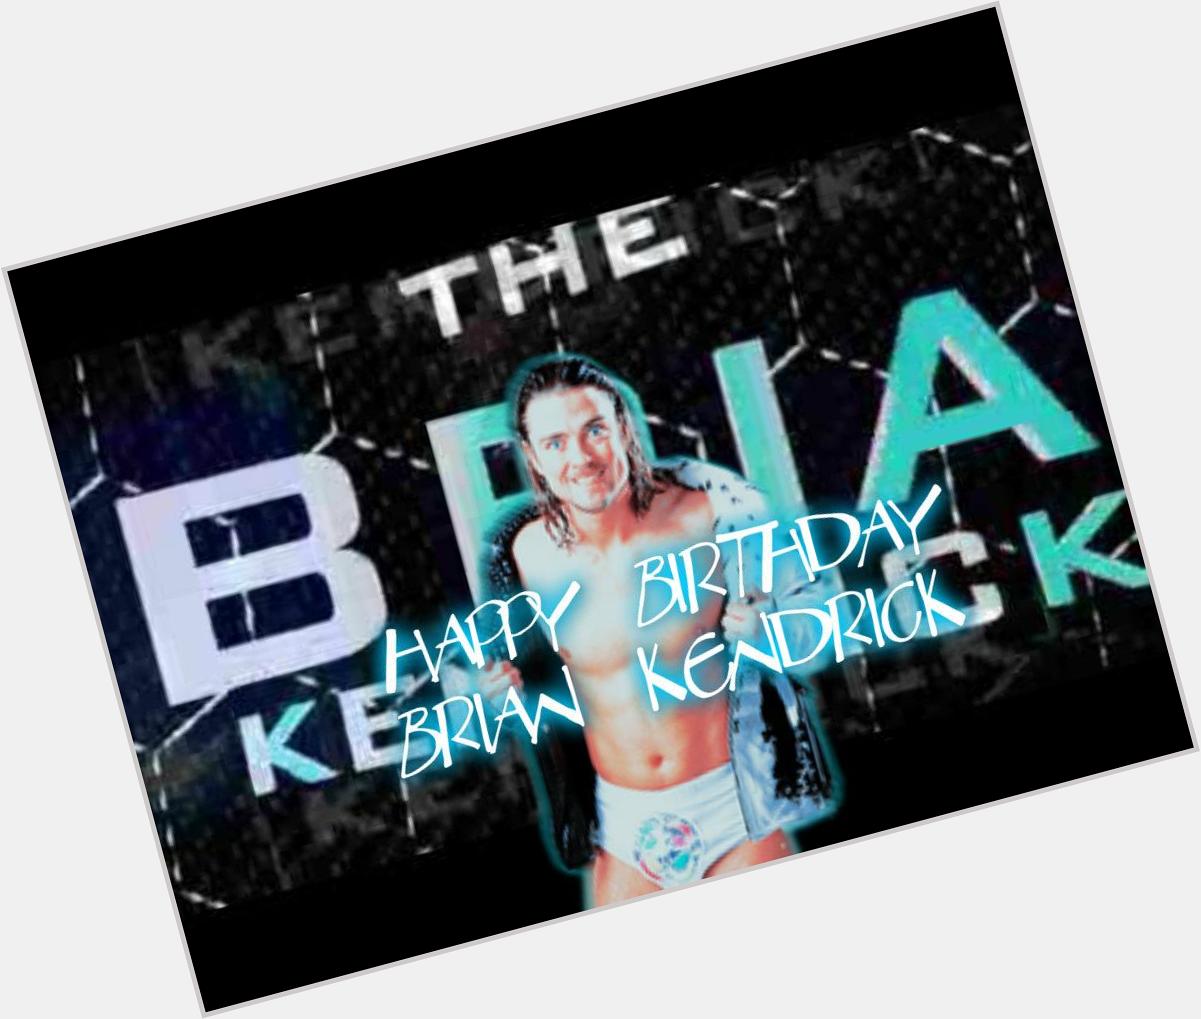  Happy Birthday to Brian Kendrick !! 